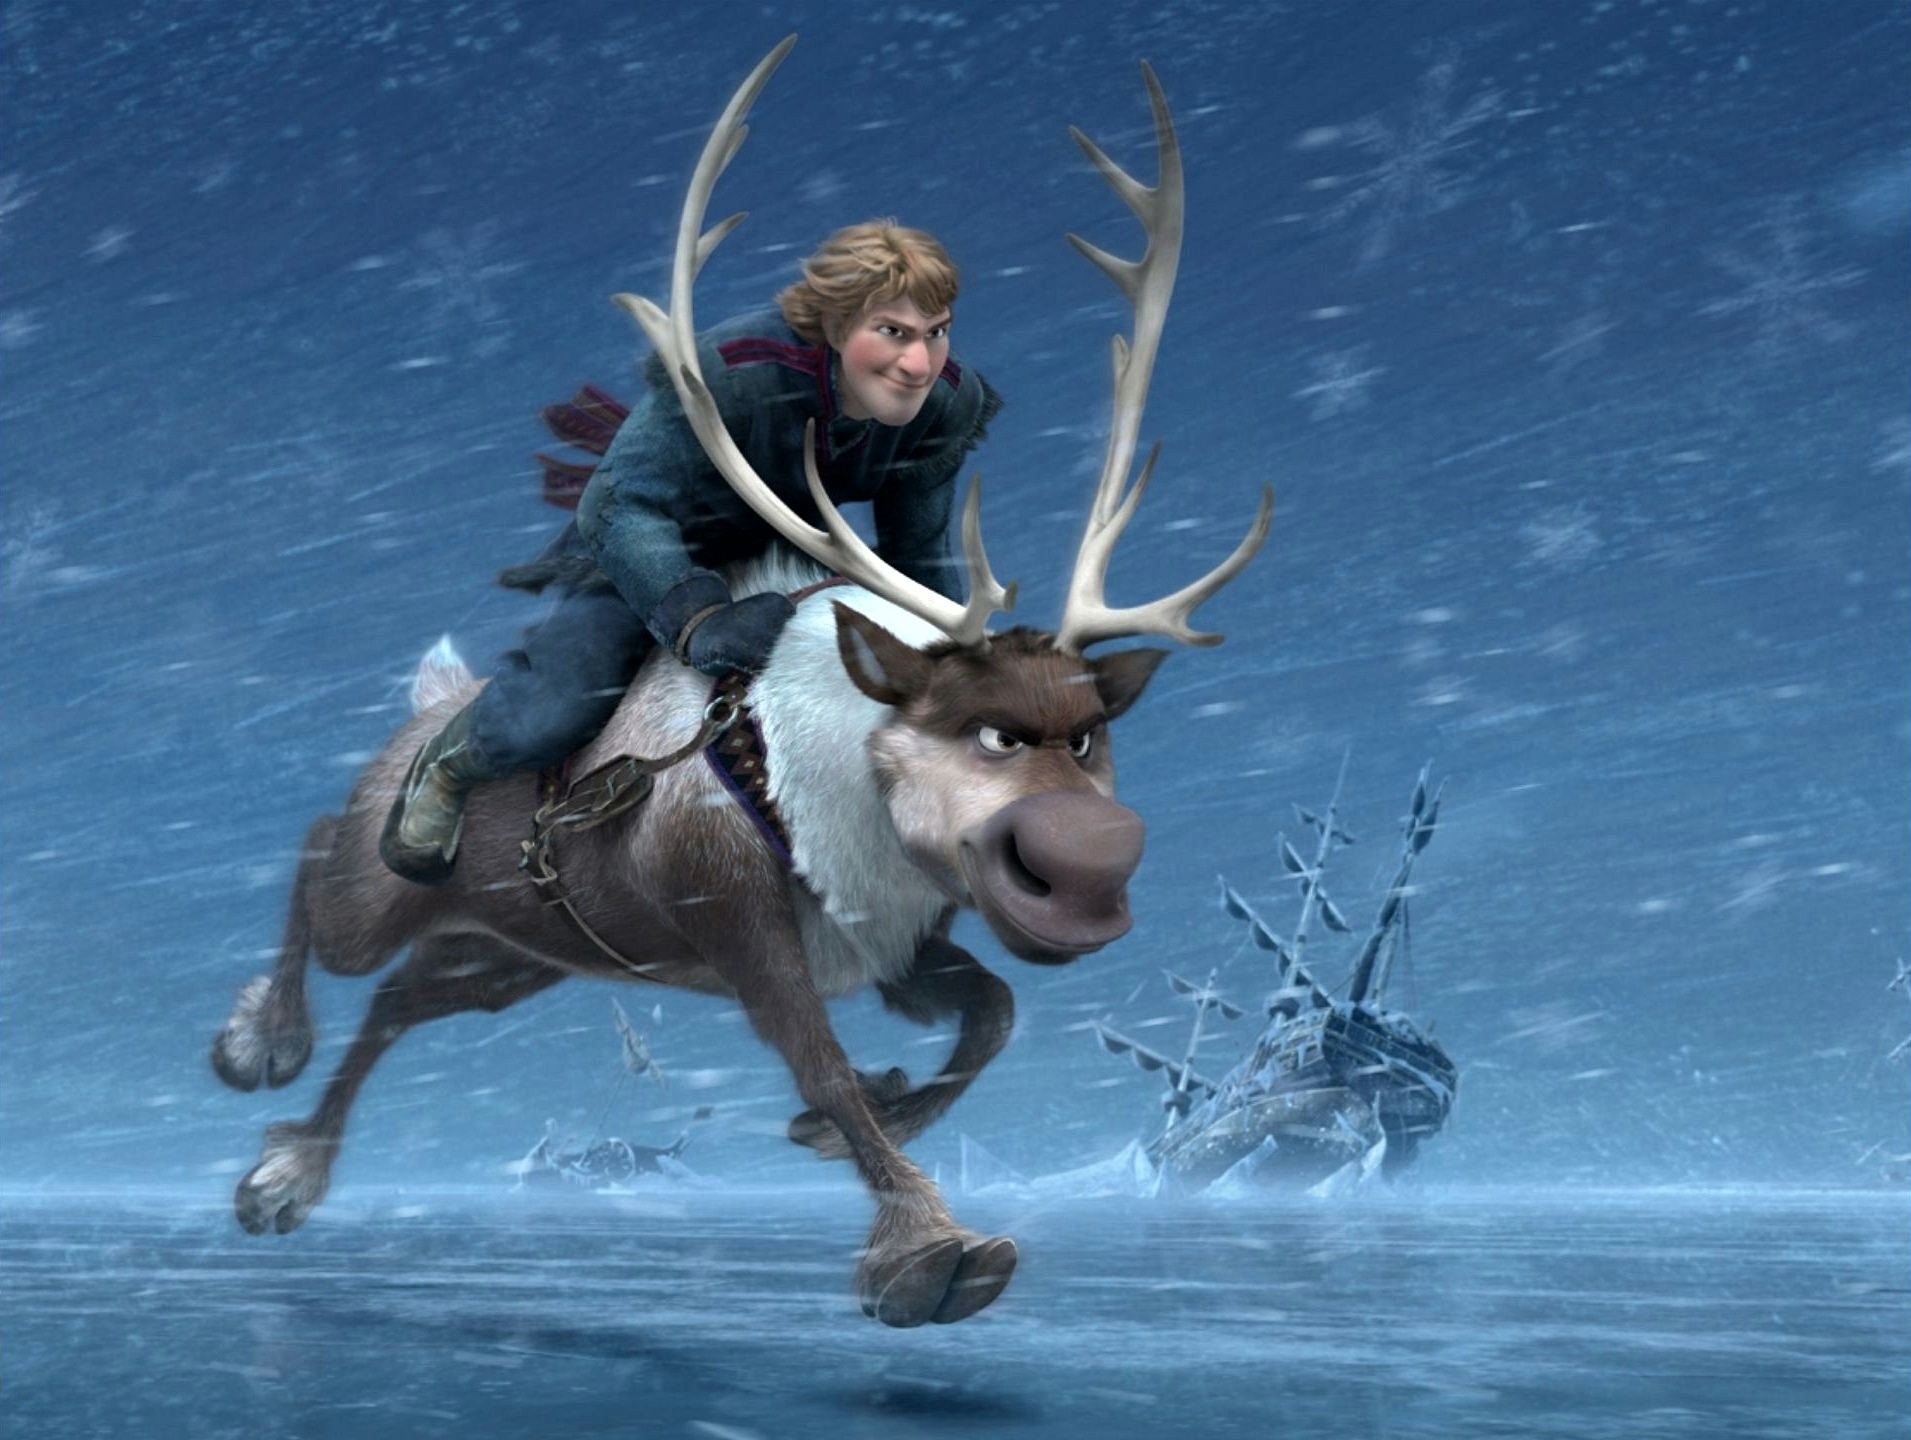 Kristoff from Walt Disney Pictures' Frozen (2013)